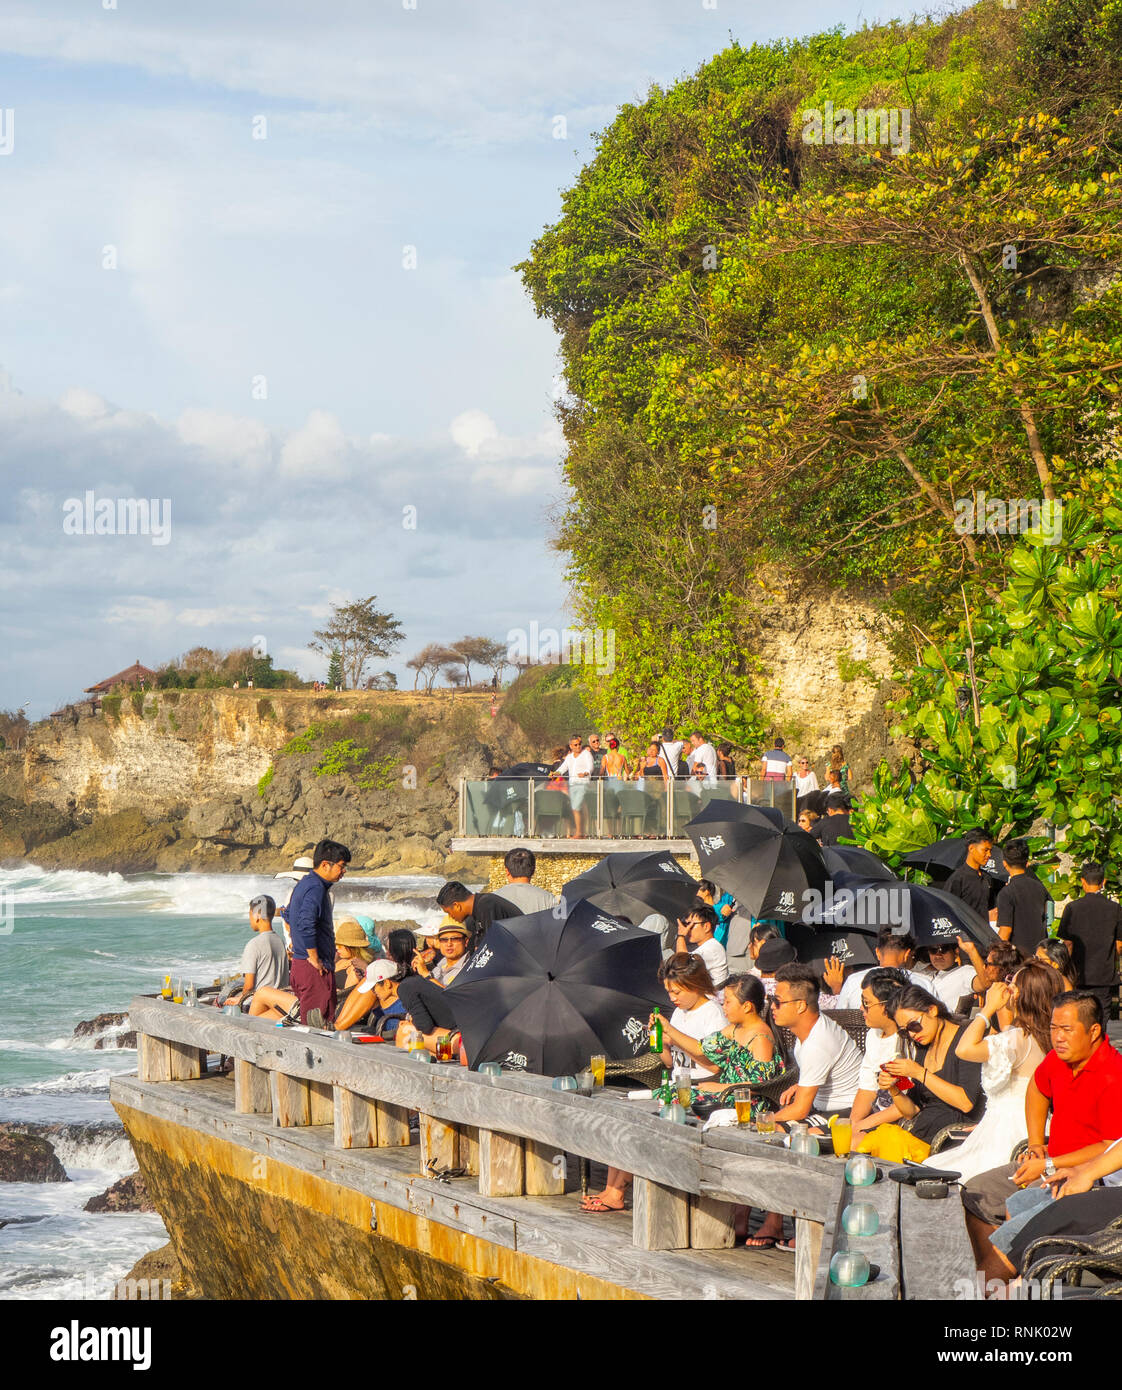 Chinesische Touristen in der Rock Bar am Ayana Resort & Spa Jimbaran Bali Indonesien. Stockfoto